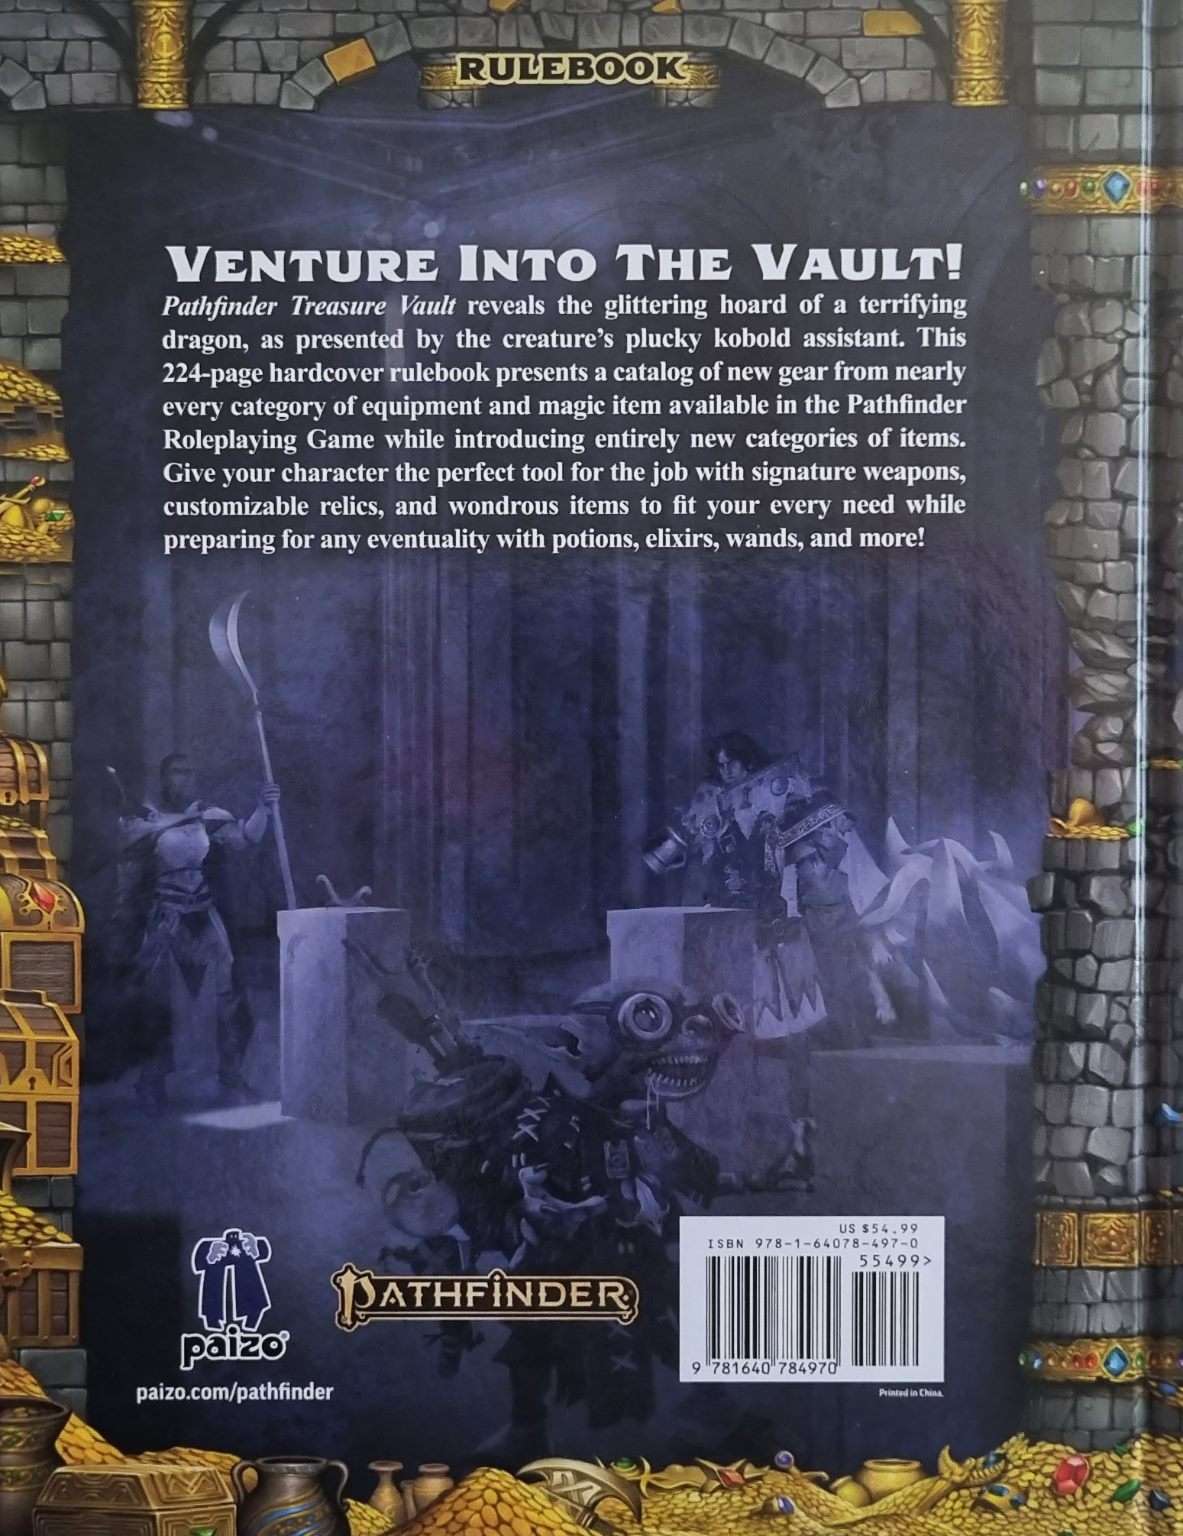 Pathfinder: Treasure Vault - Second Edition (2e) Default Title